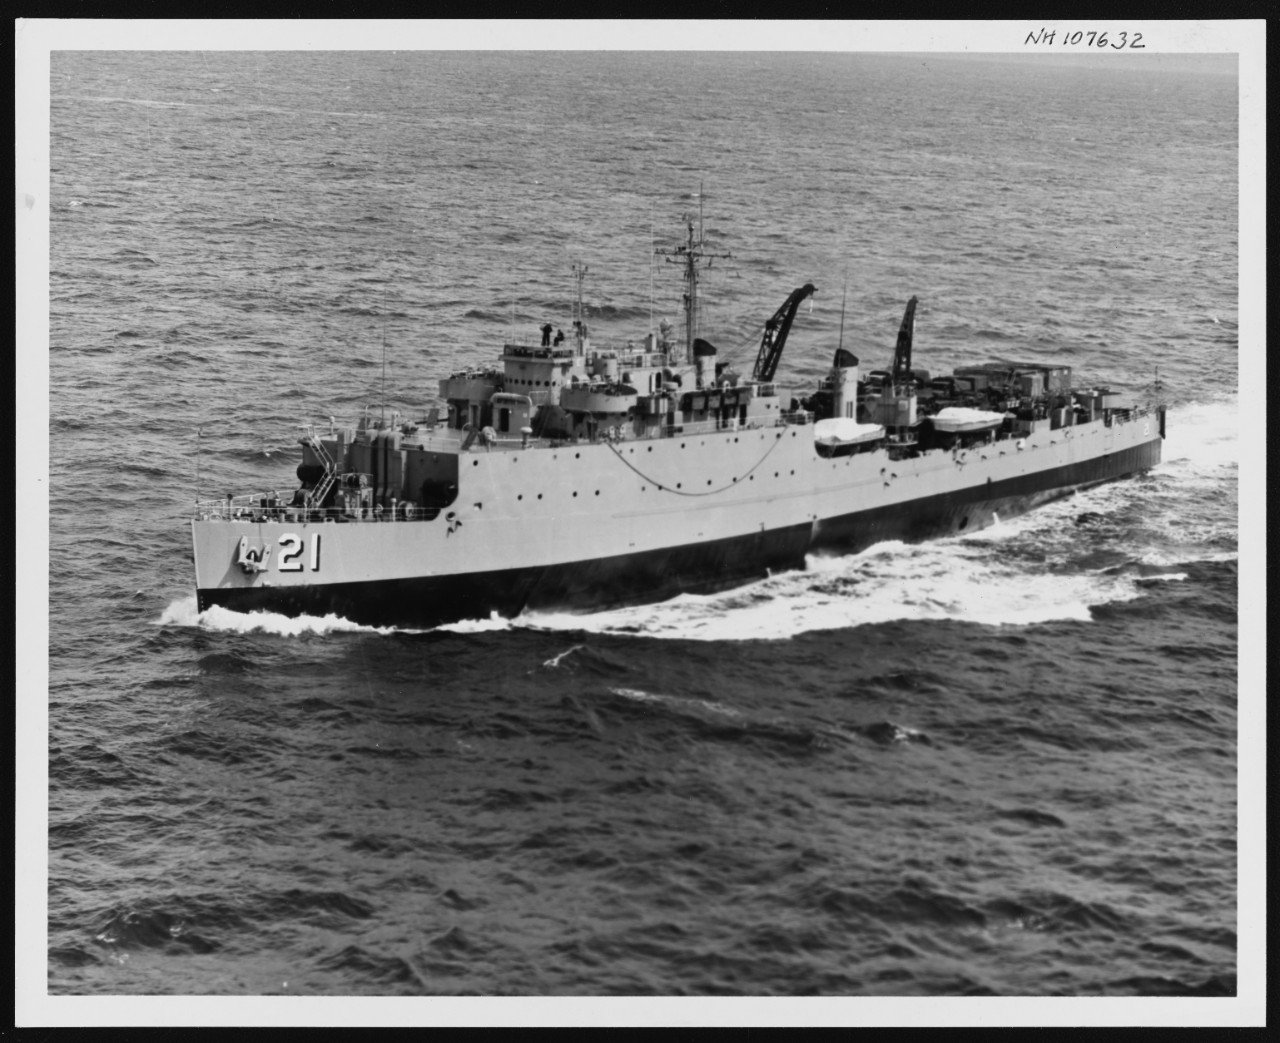 Photo #: NH 107632  USS Fort Mandan